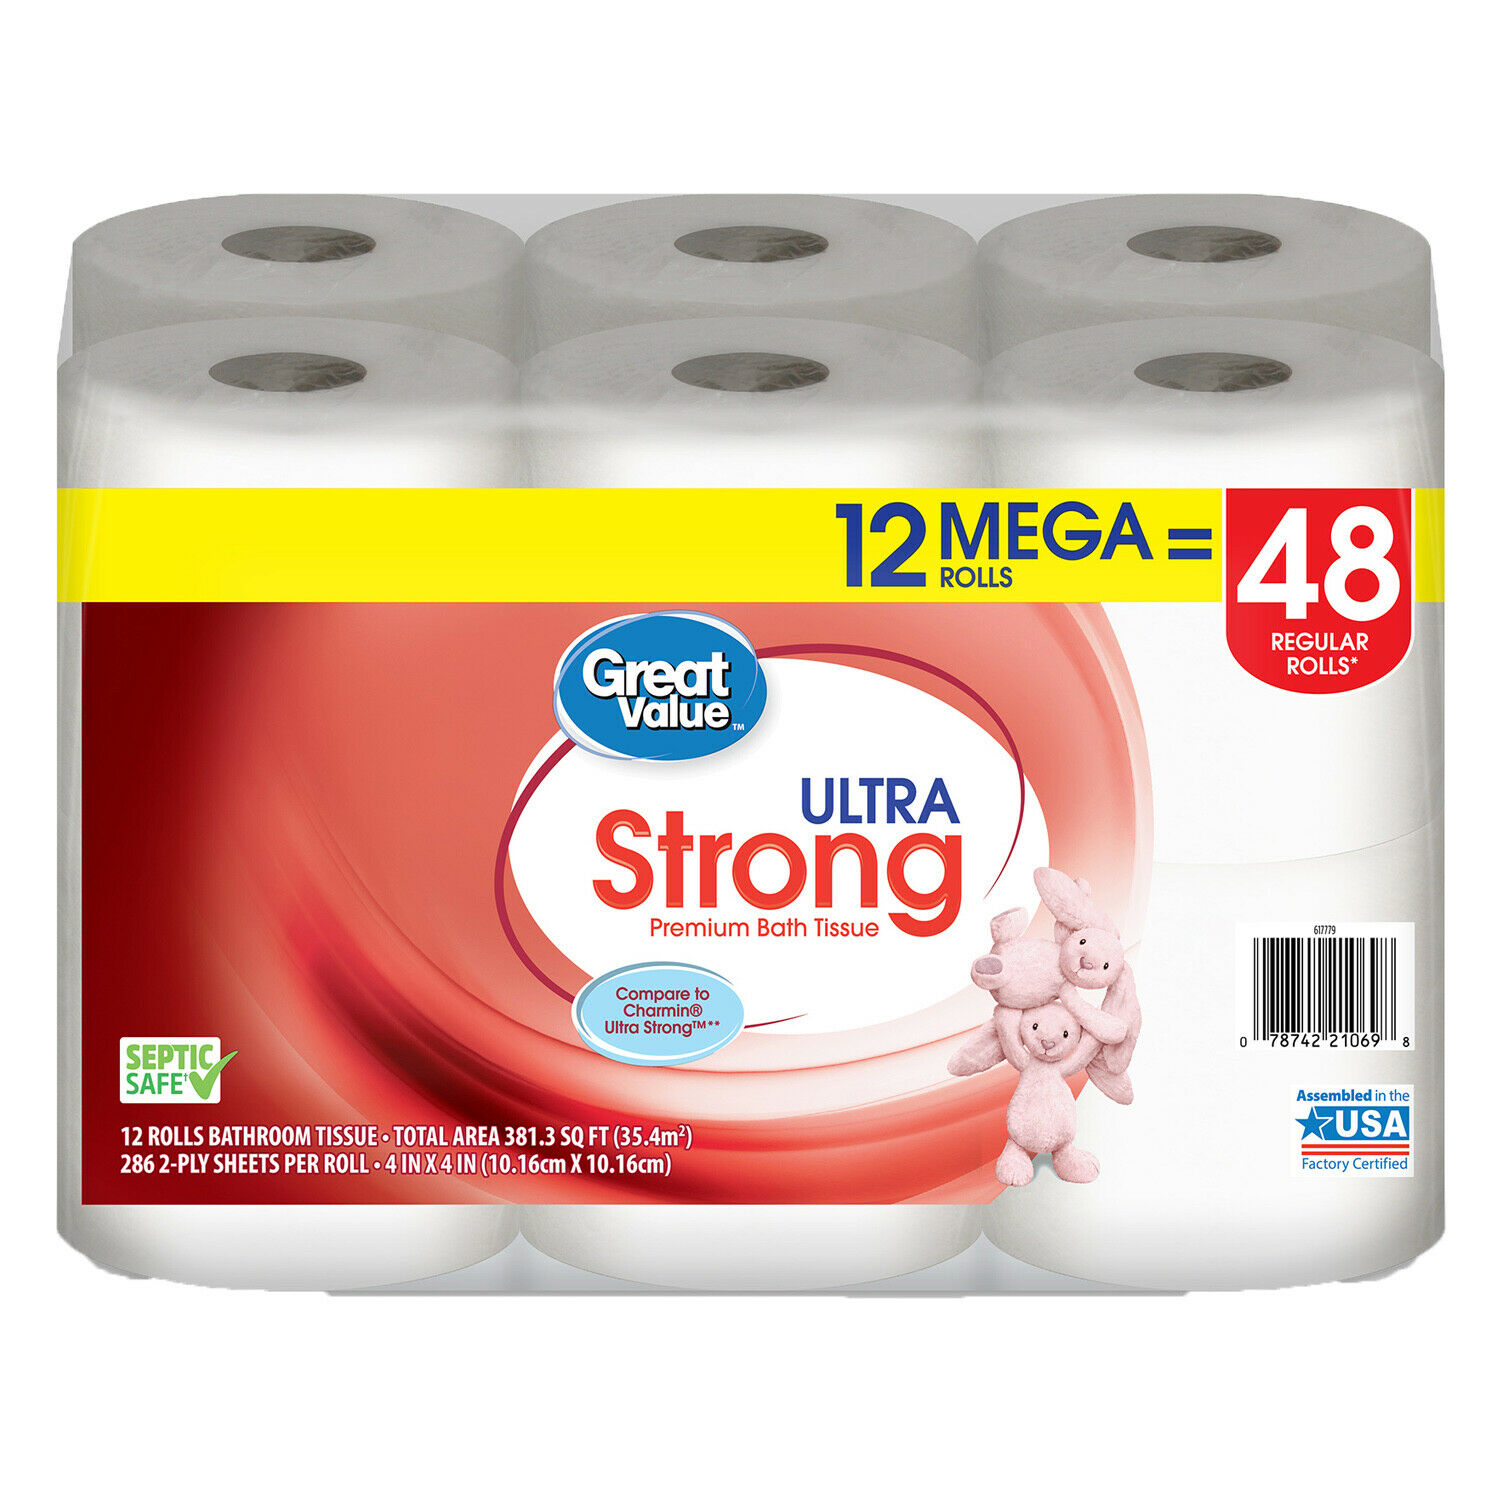 Great Value Ultra Strong Premium Toilet Paper, 12 Mega Rolls